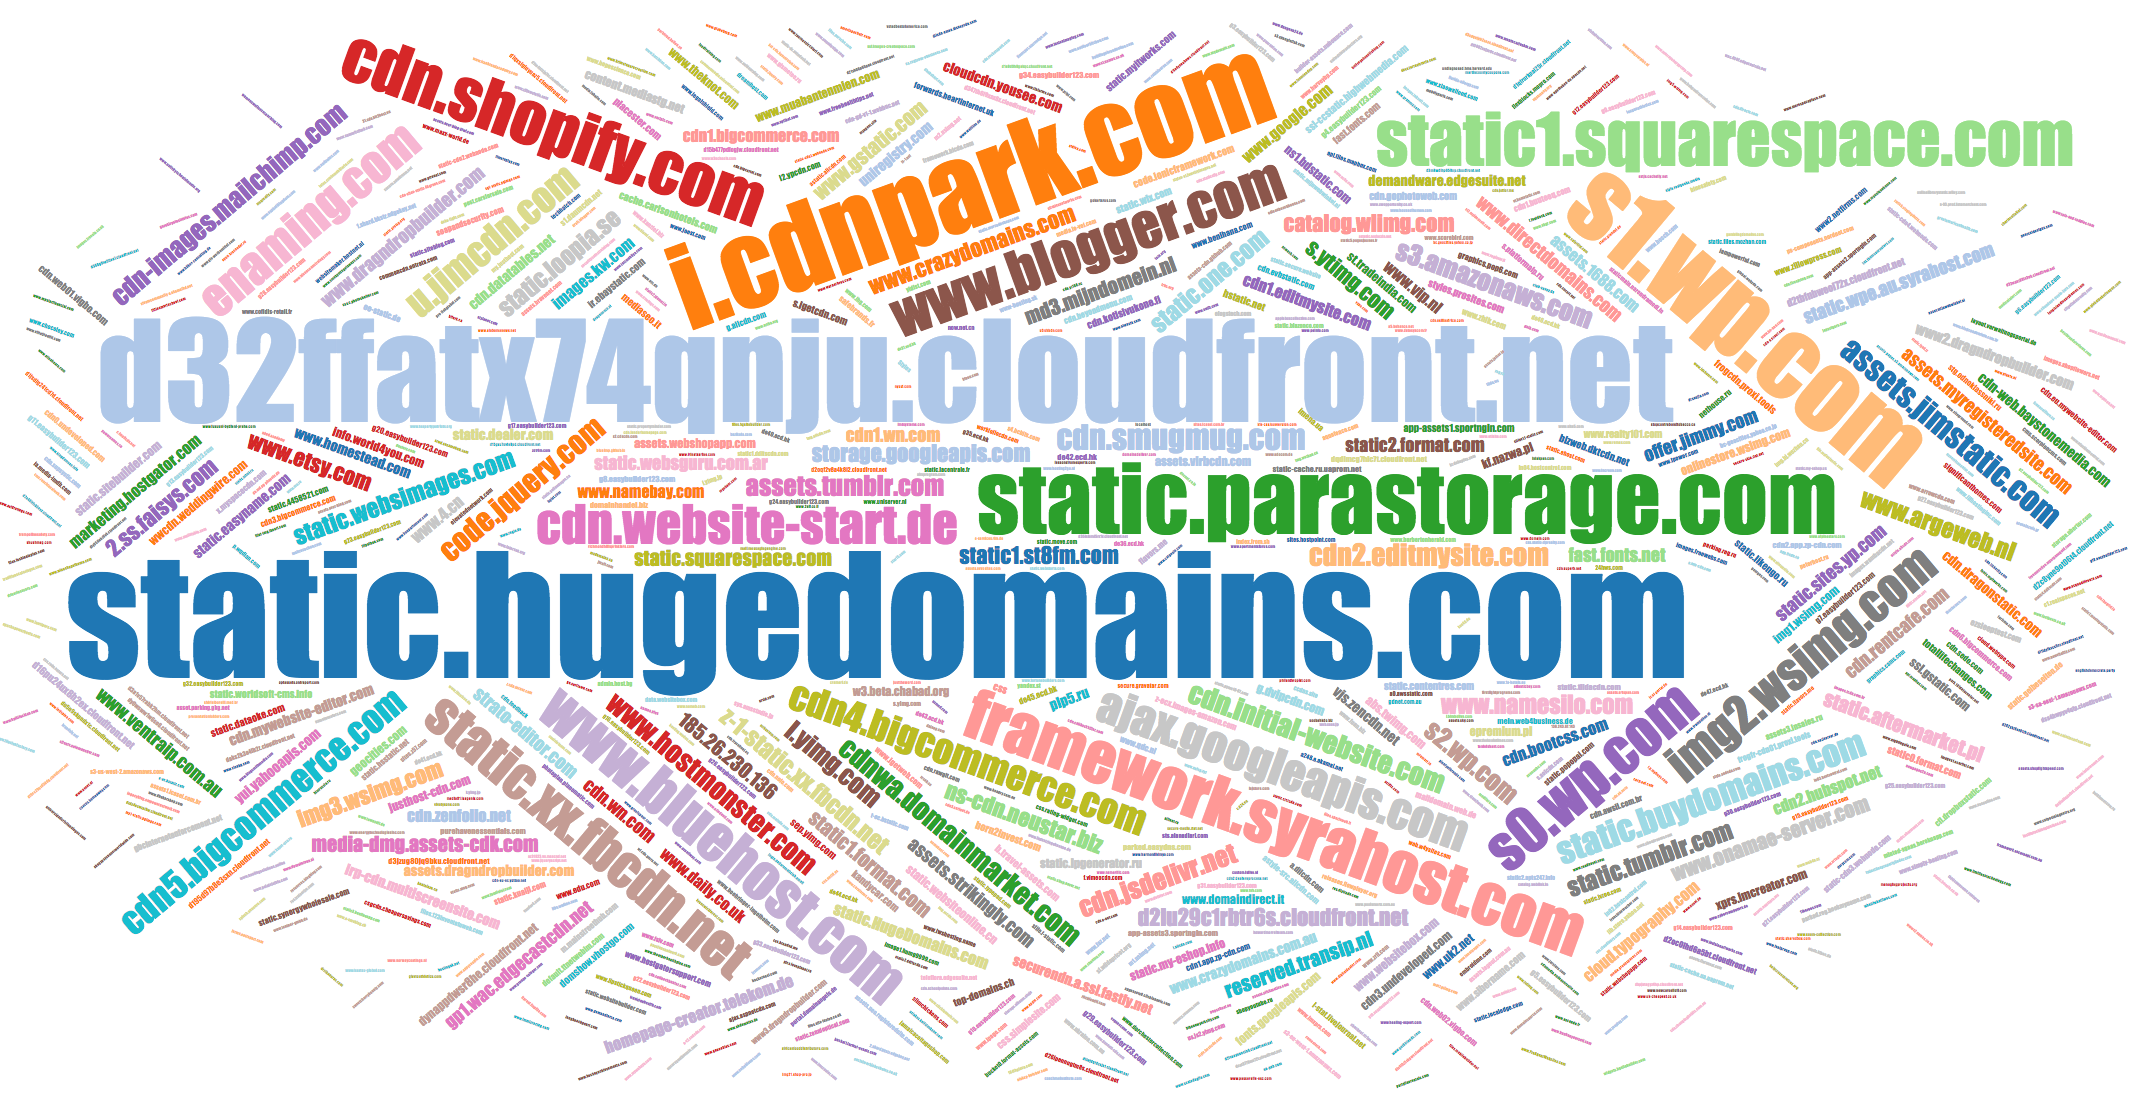 Popular names of CSS domains img1.wsimg.com, img3.wsimg.com, etc.